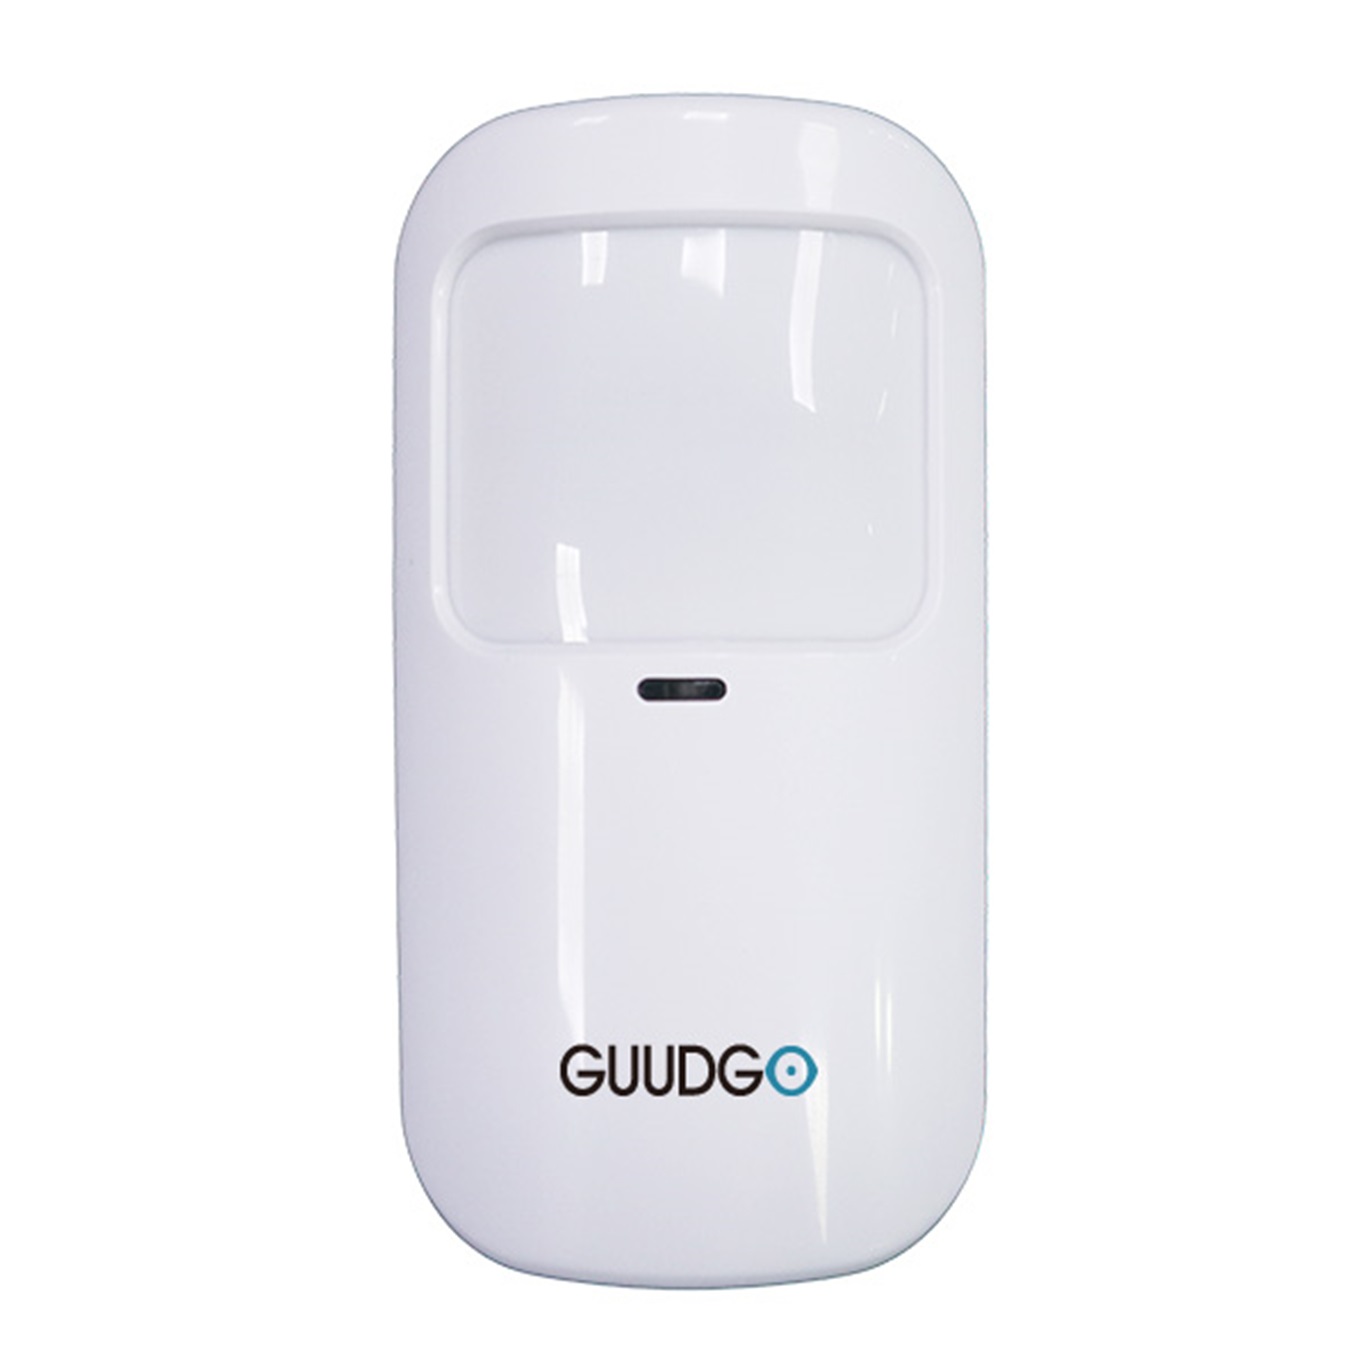 GUUDGO-Wireless-Pet-immunity-PIR-Motion-Sensor-Motion-Detecting-Human-Body-Infrared-Sensor-433MHz-fo-1601244